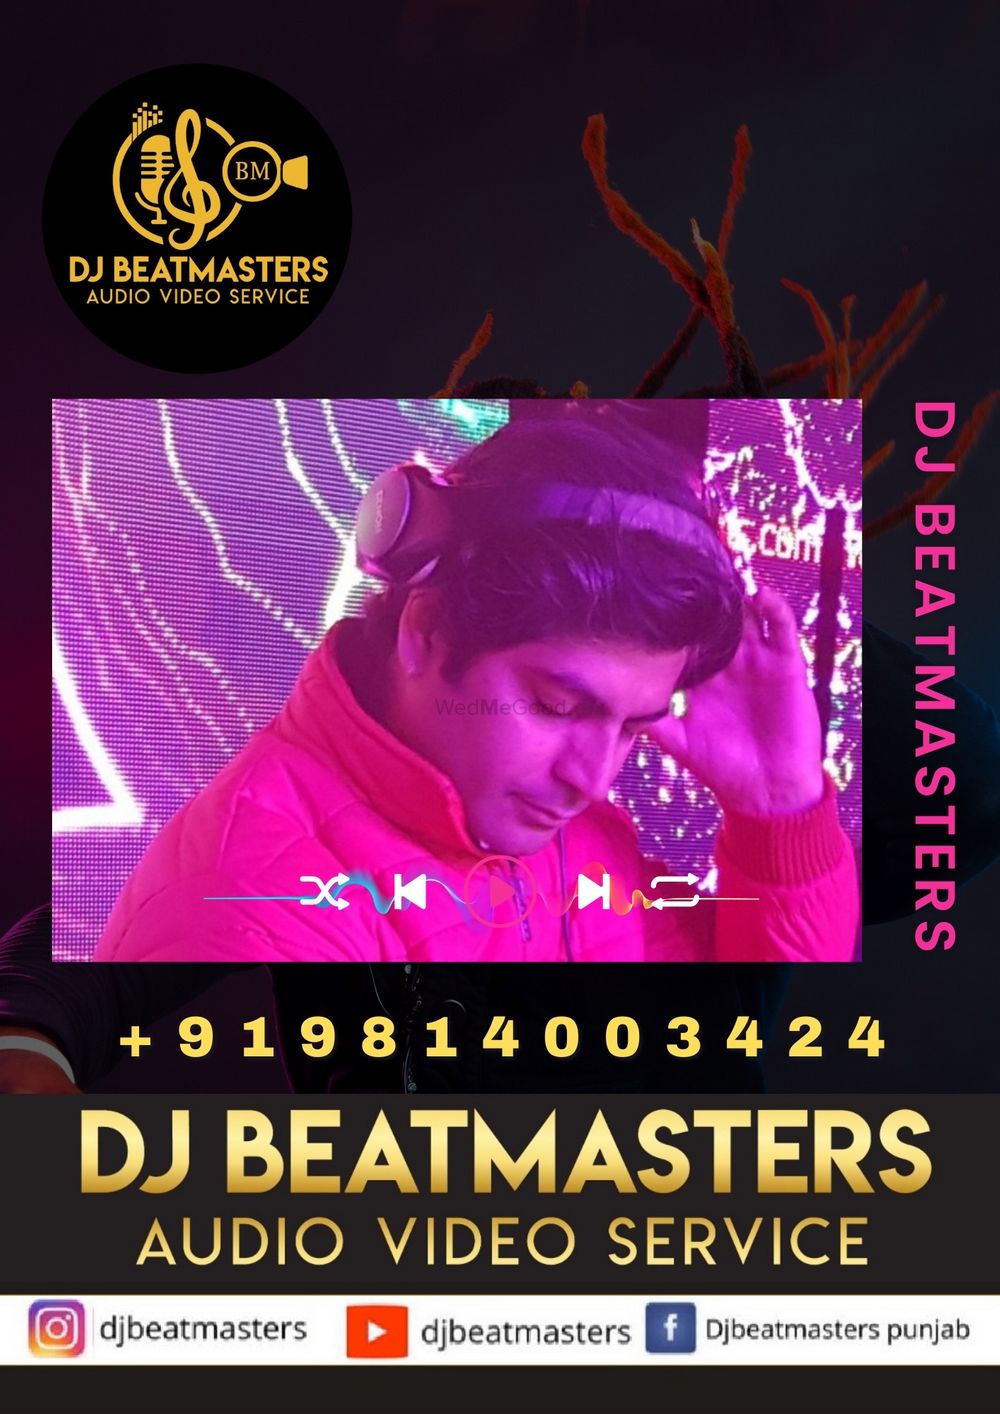 Photo By Dj beatmasters - DJs